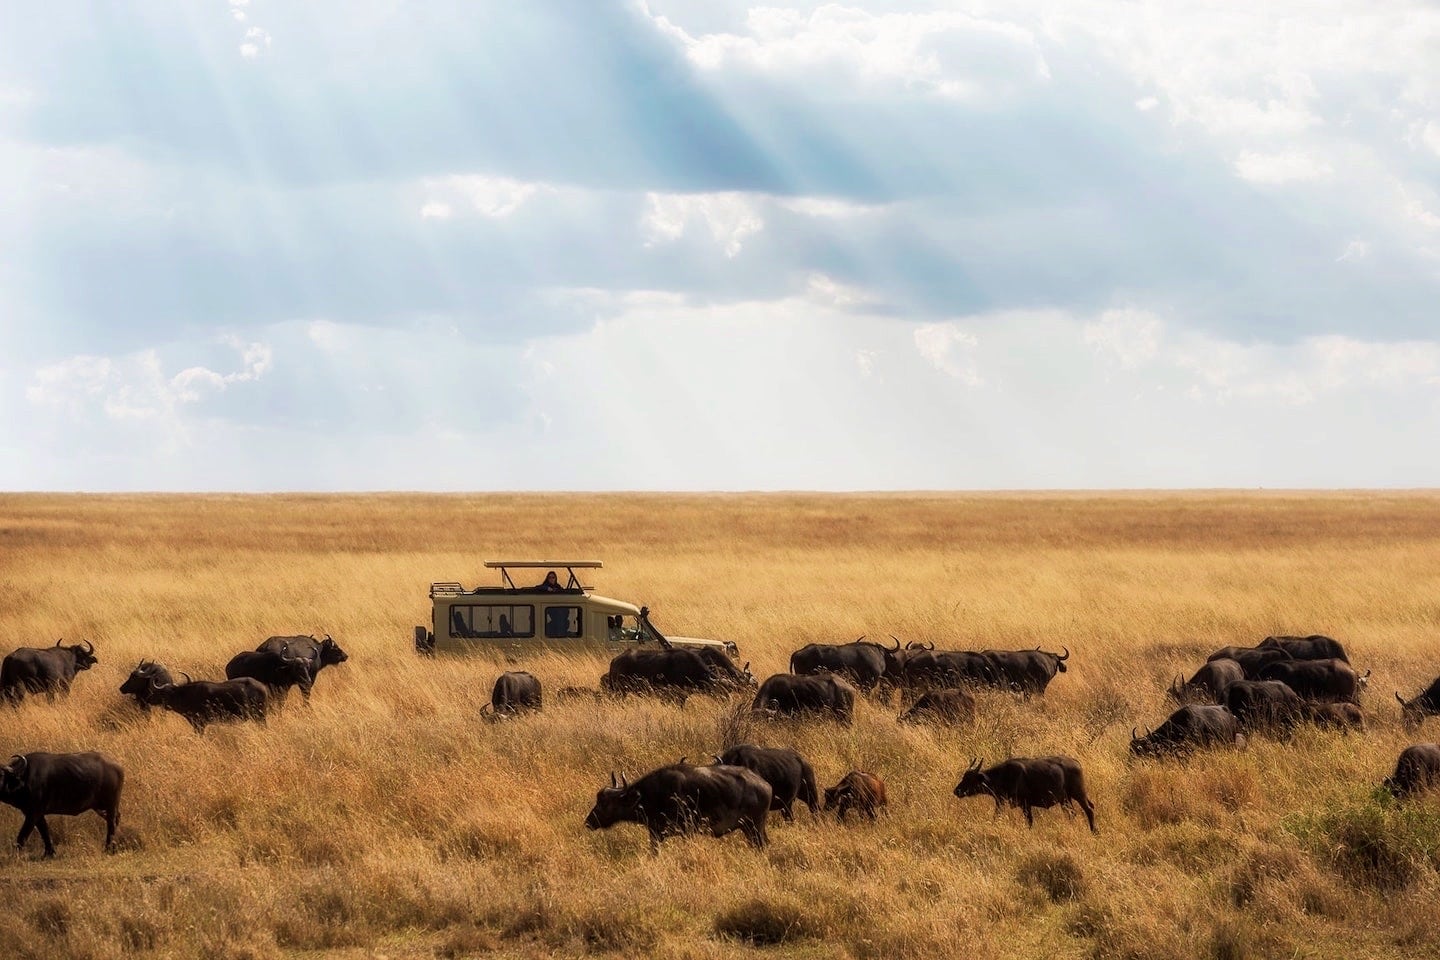 Tanzania safari tours